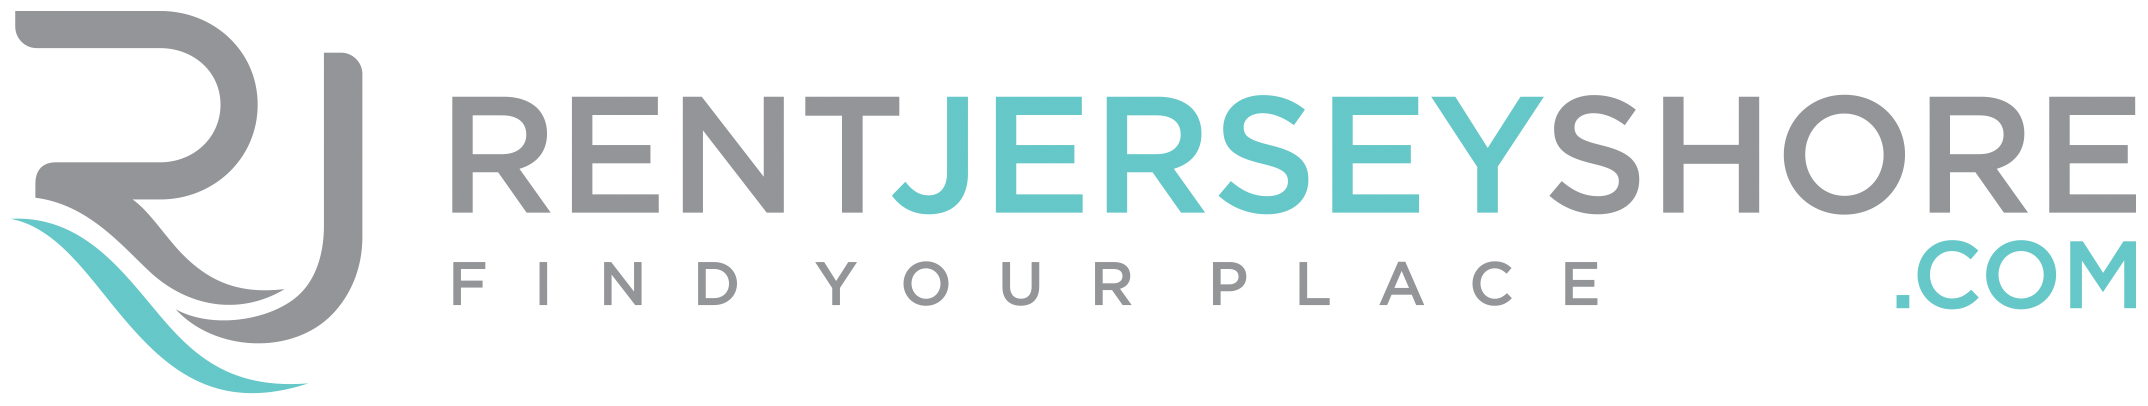 Rent Jersey Shore Logo